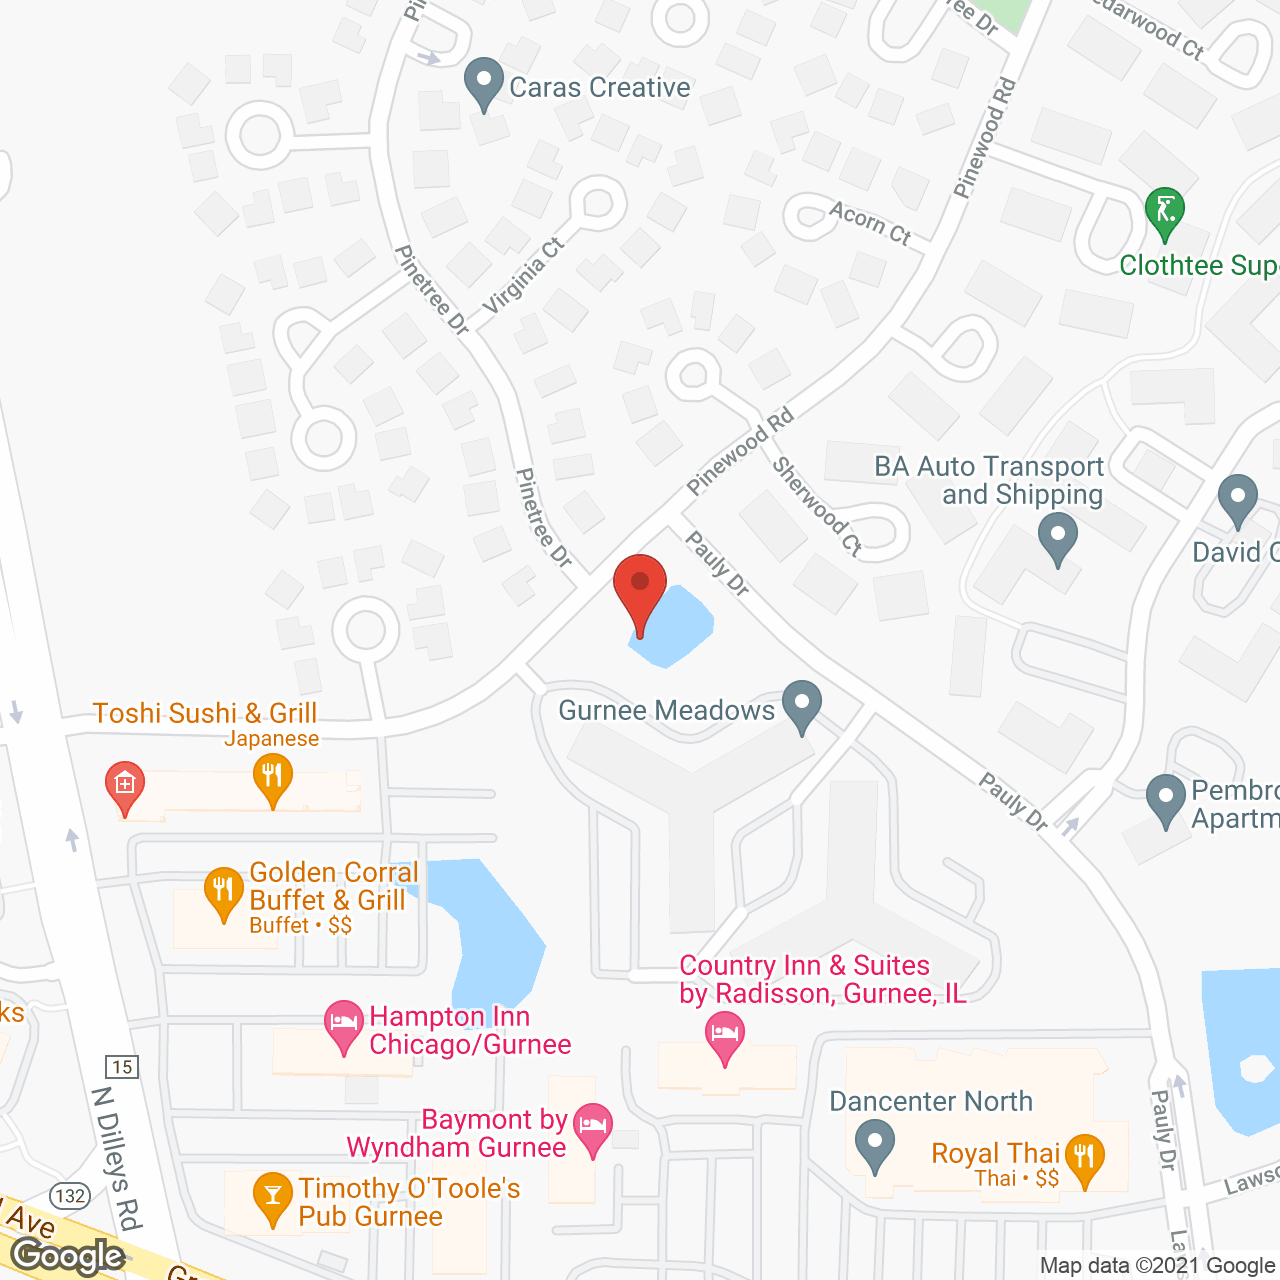 Gurnee Meadows in google map